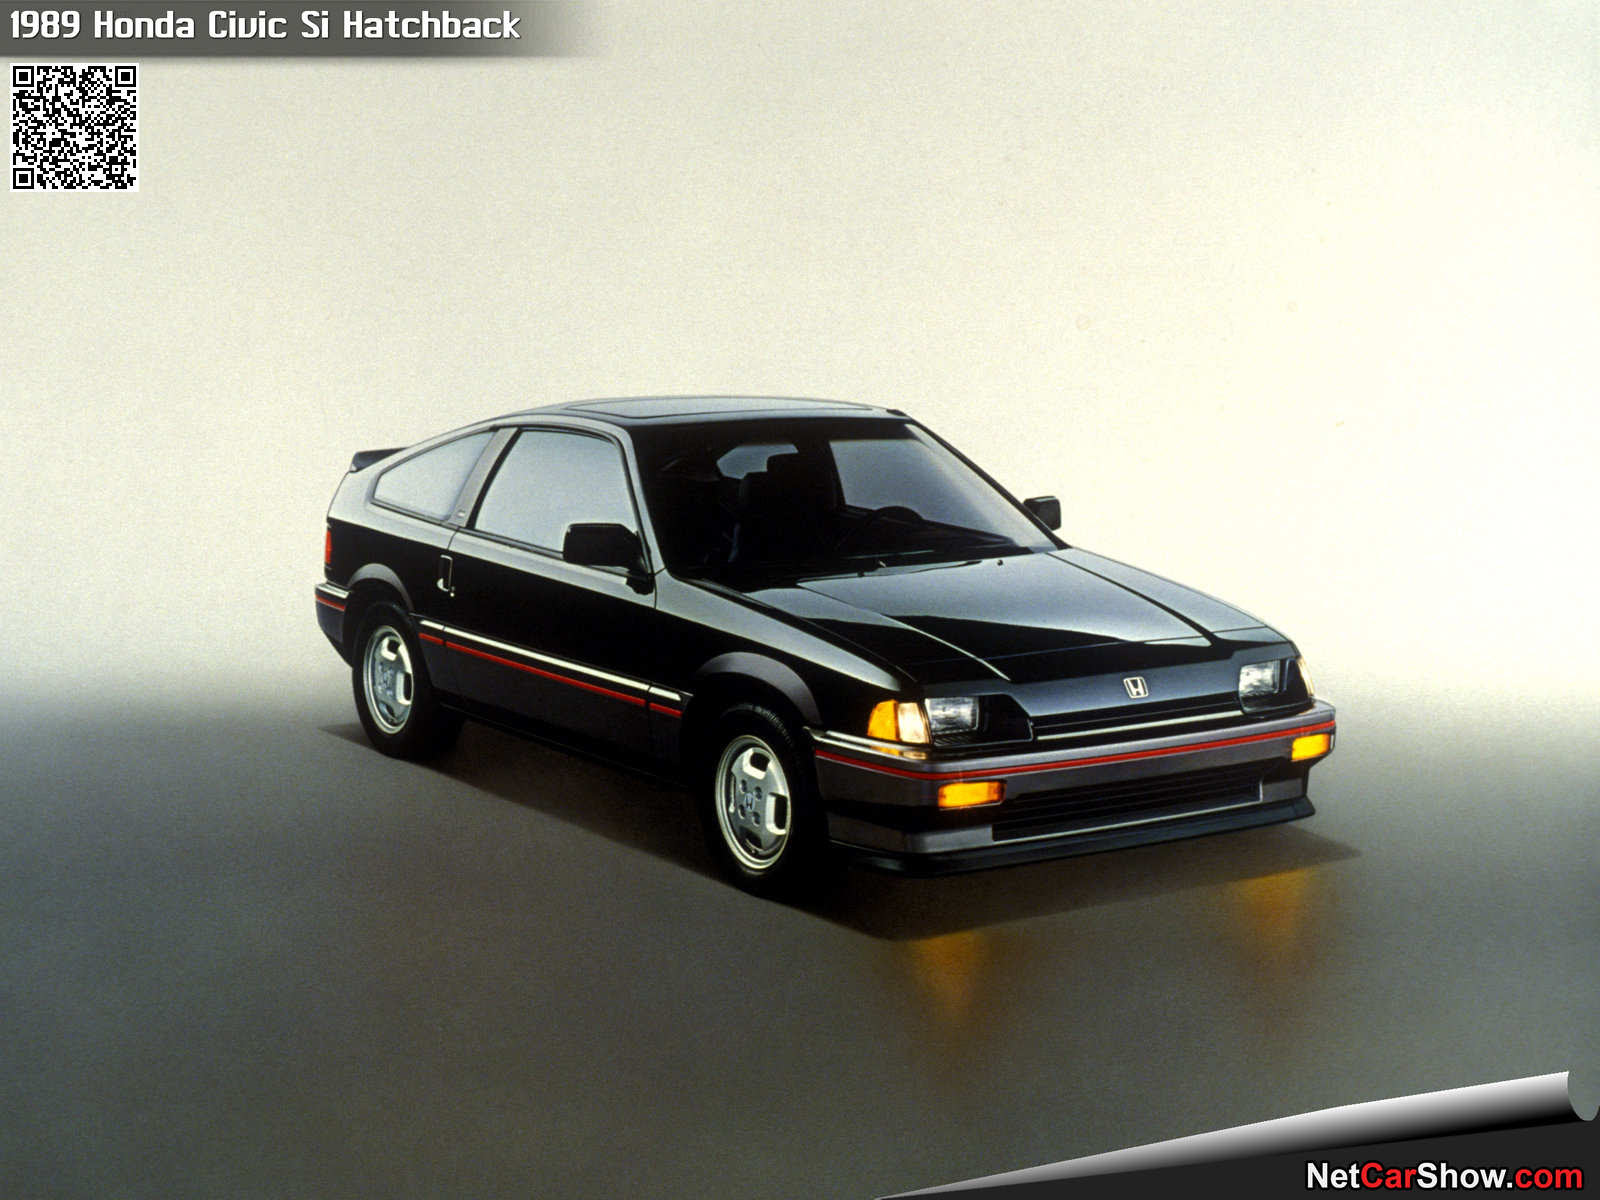 Honda Civic_Si_Hatchback 1989 wallpaper